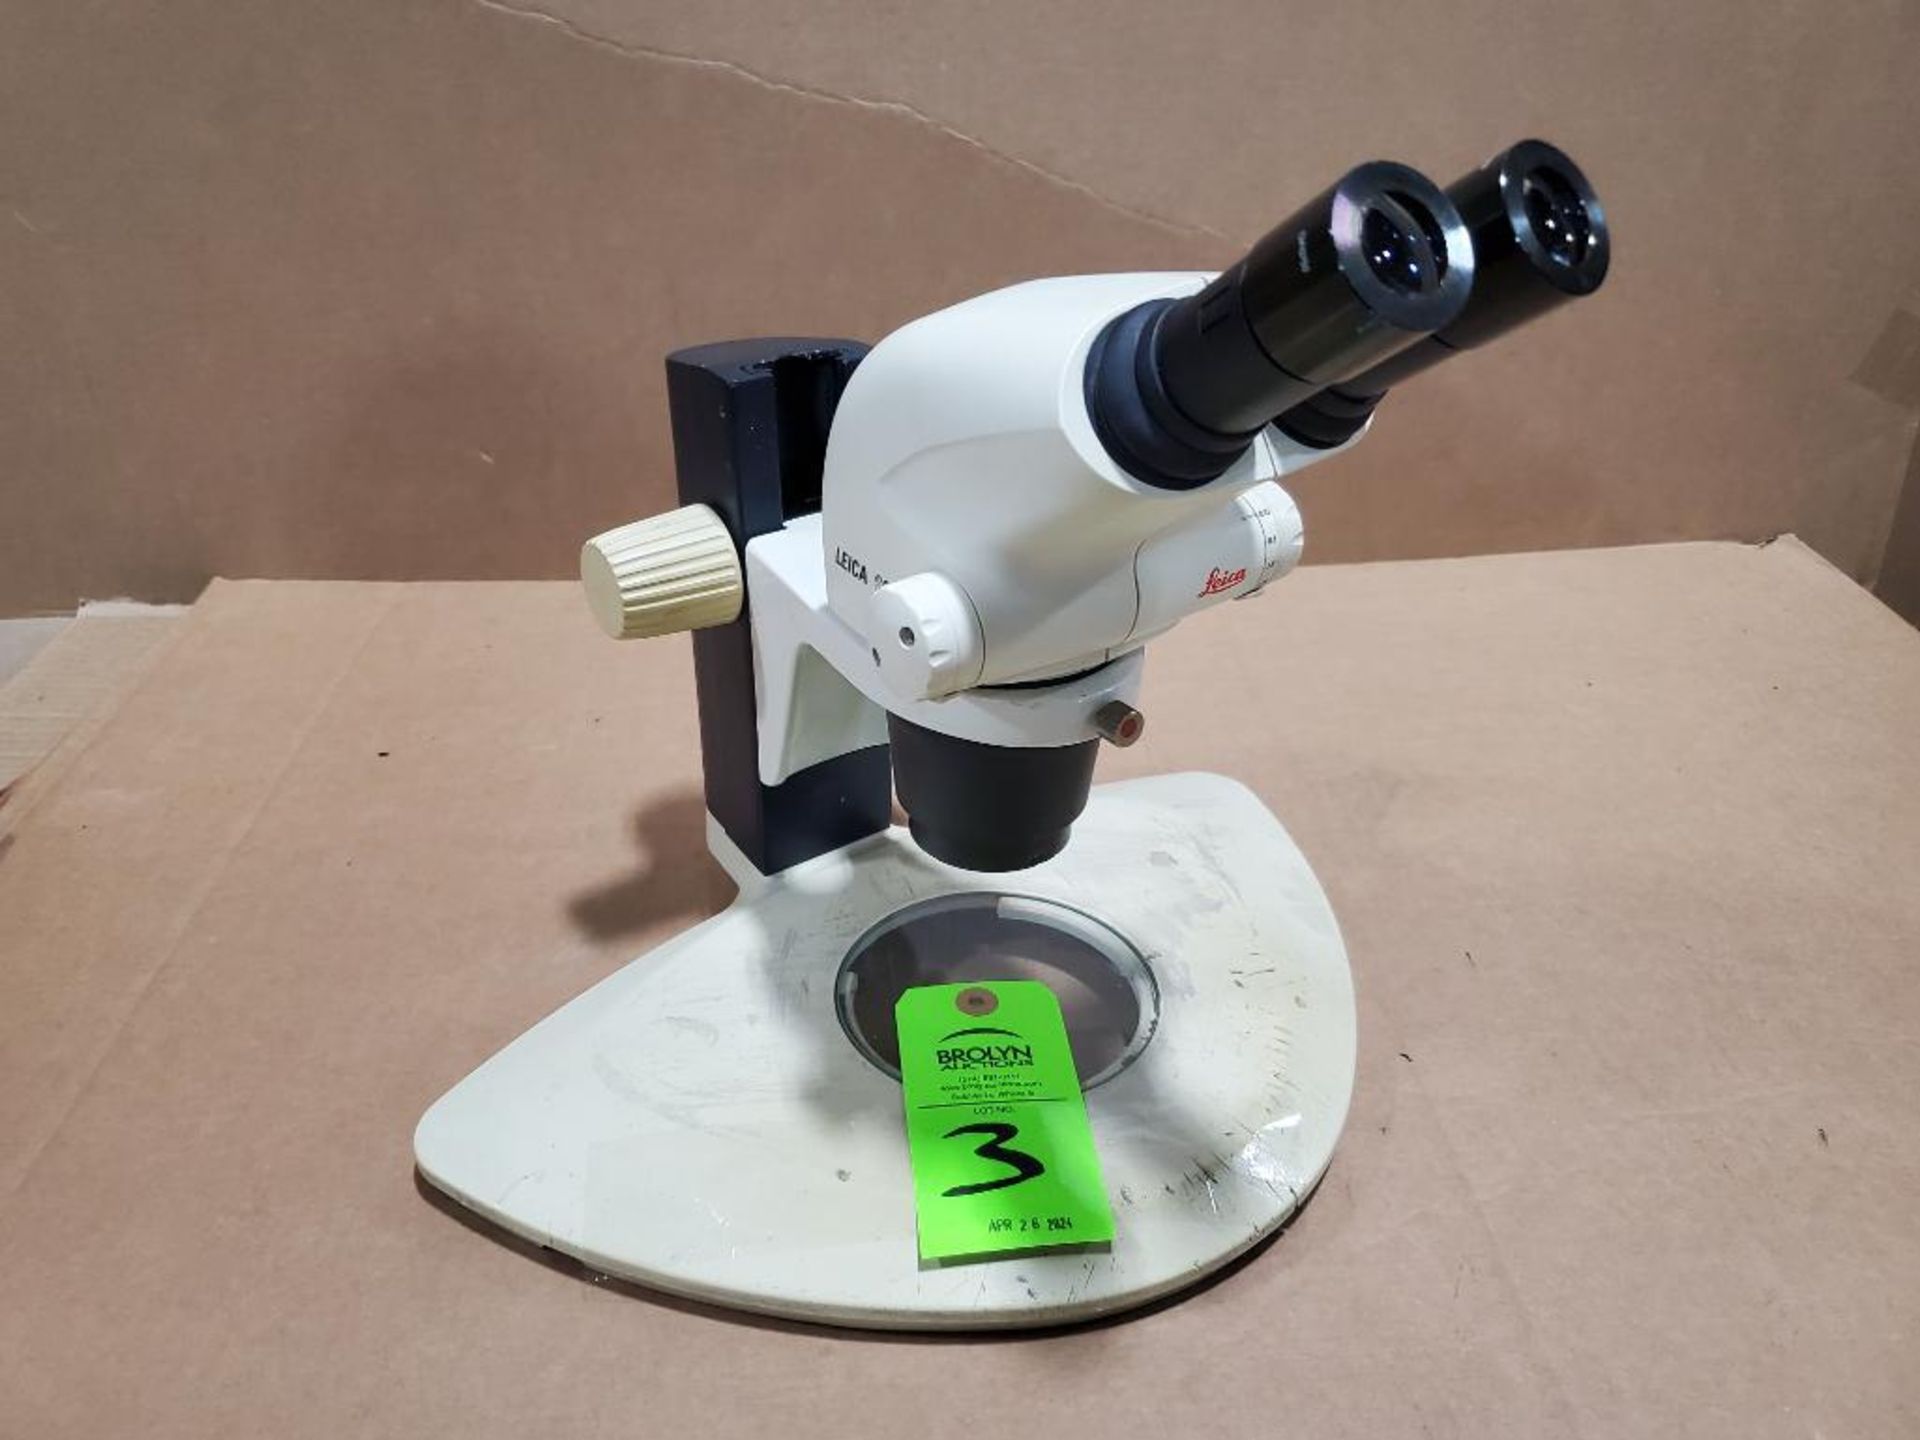 Leica S6E microscope.